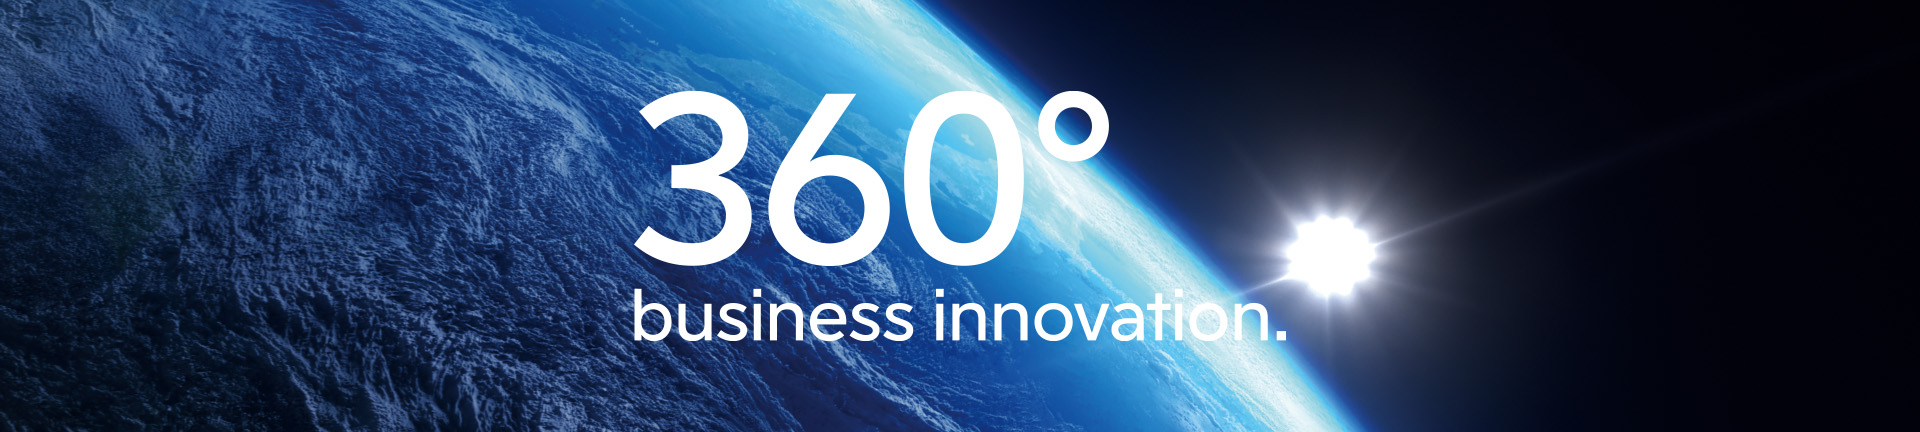 360° business innovation